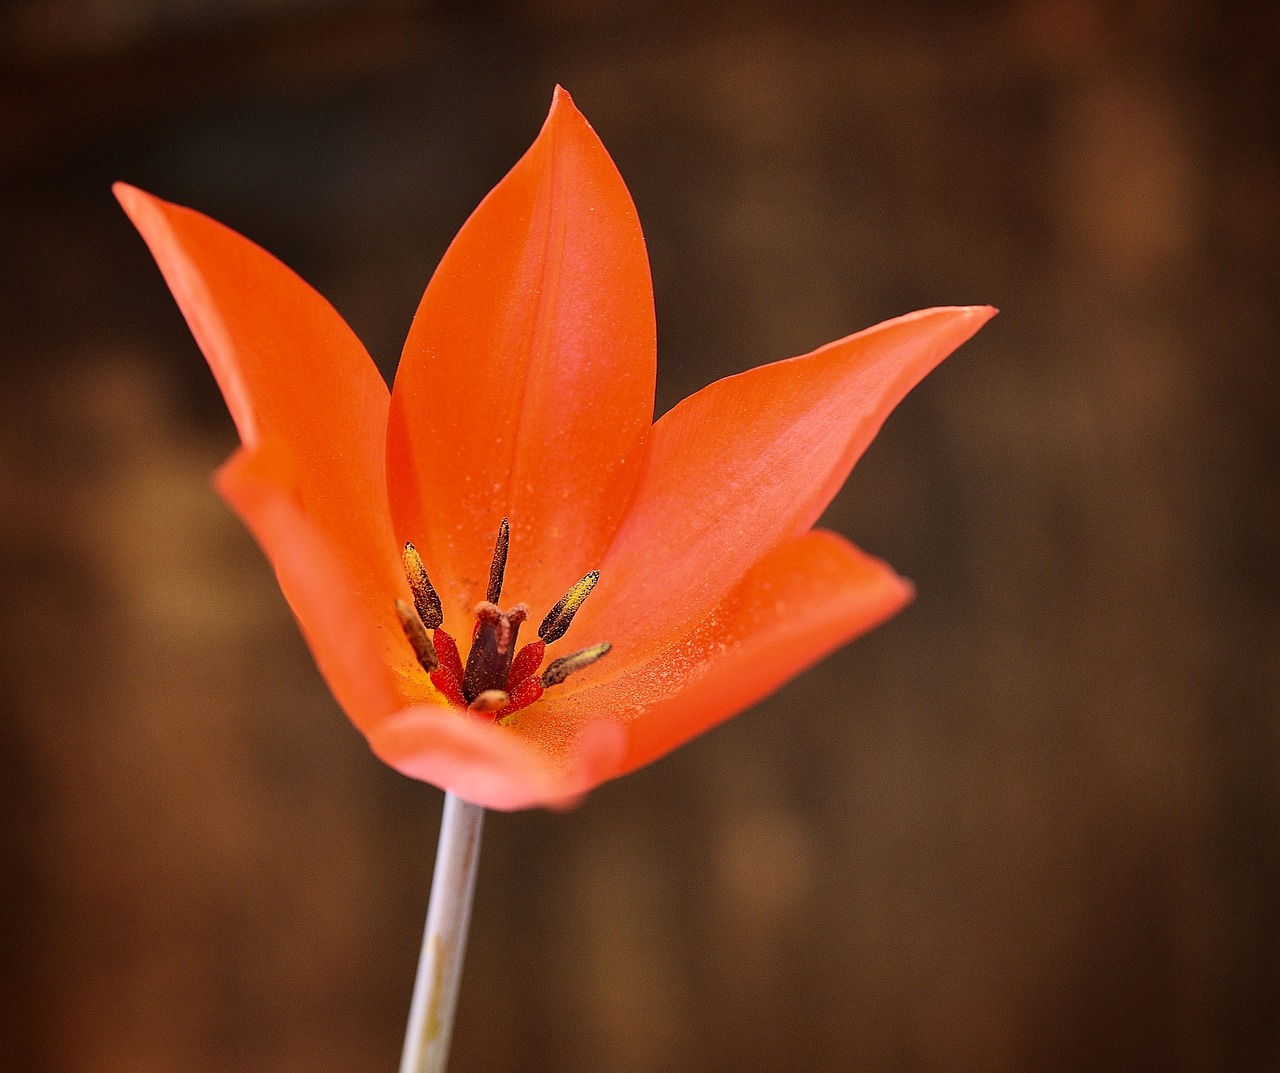 Tulip,red,blossom,bloom,flower - free image from needpix.com